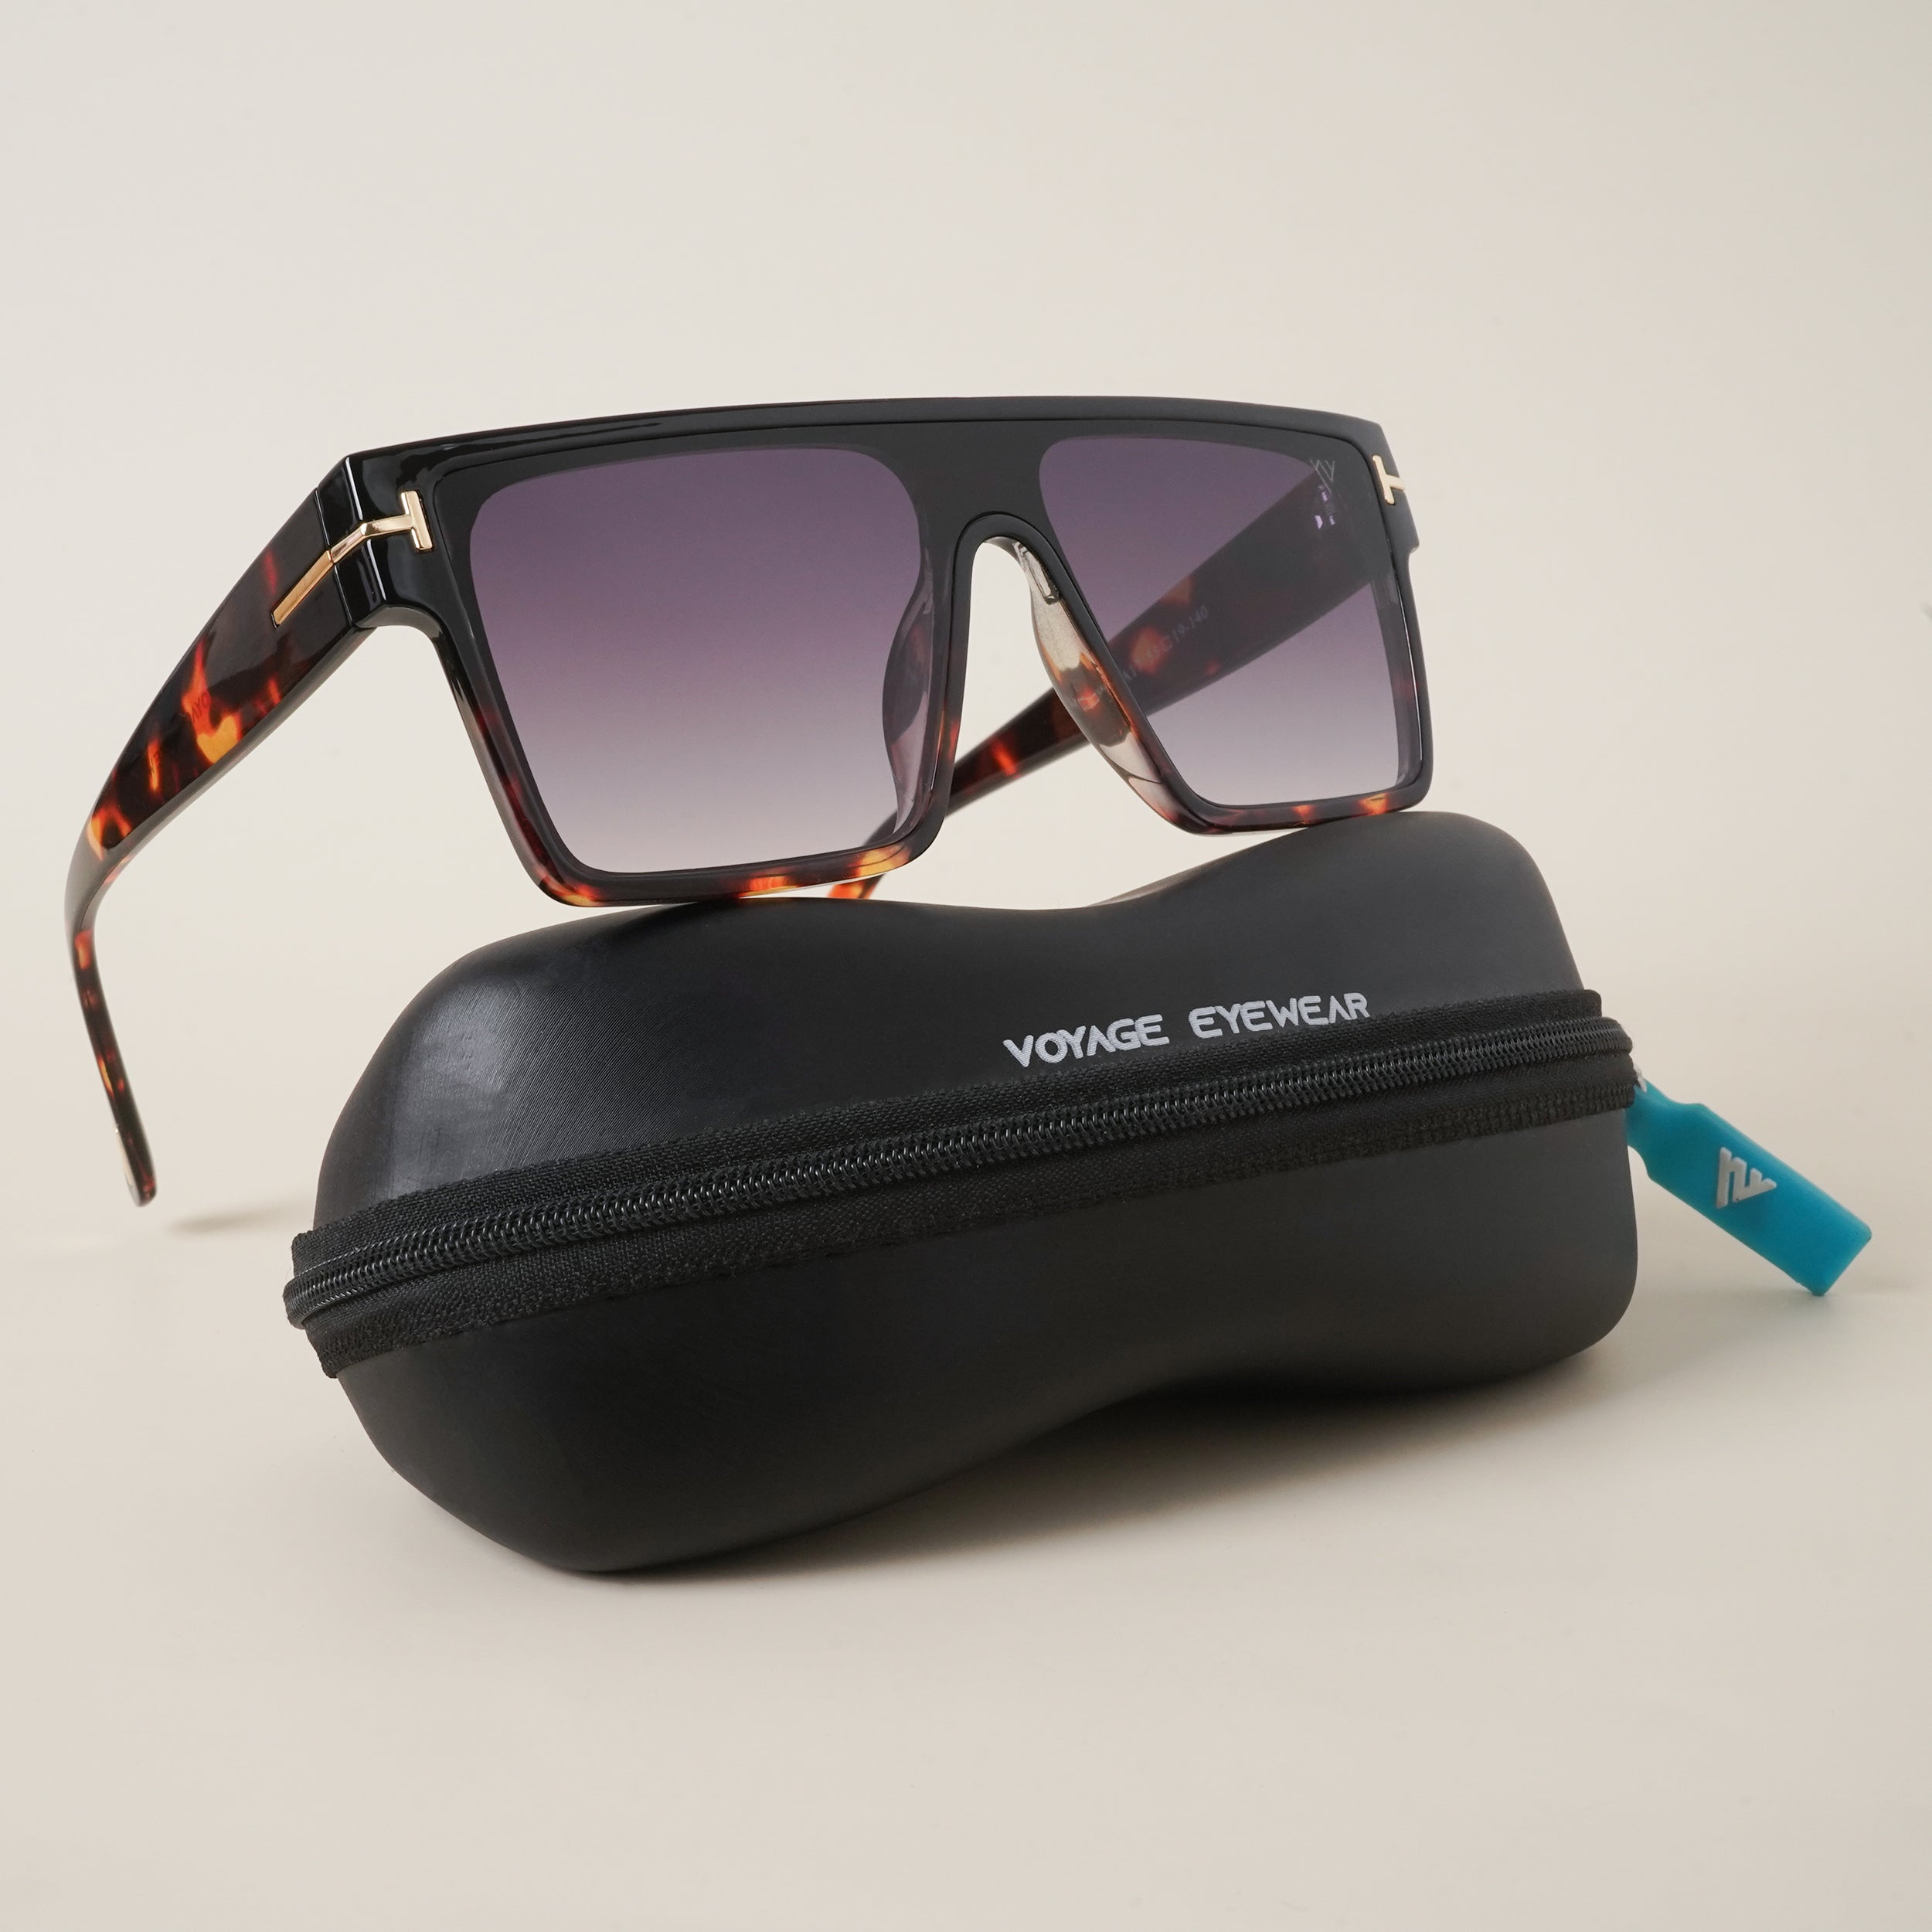 Voyage Grey Wayfarer Sunglasses - MG3936